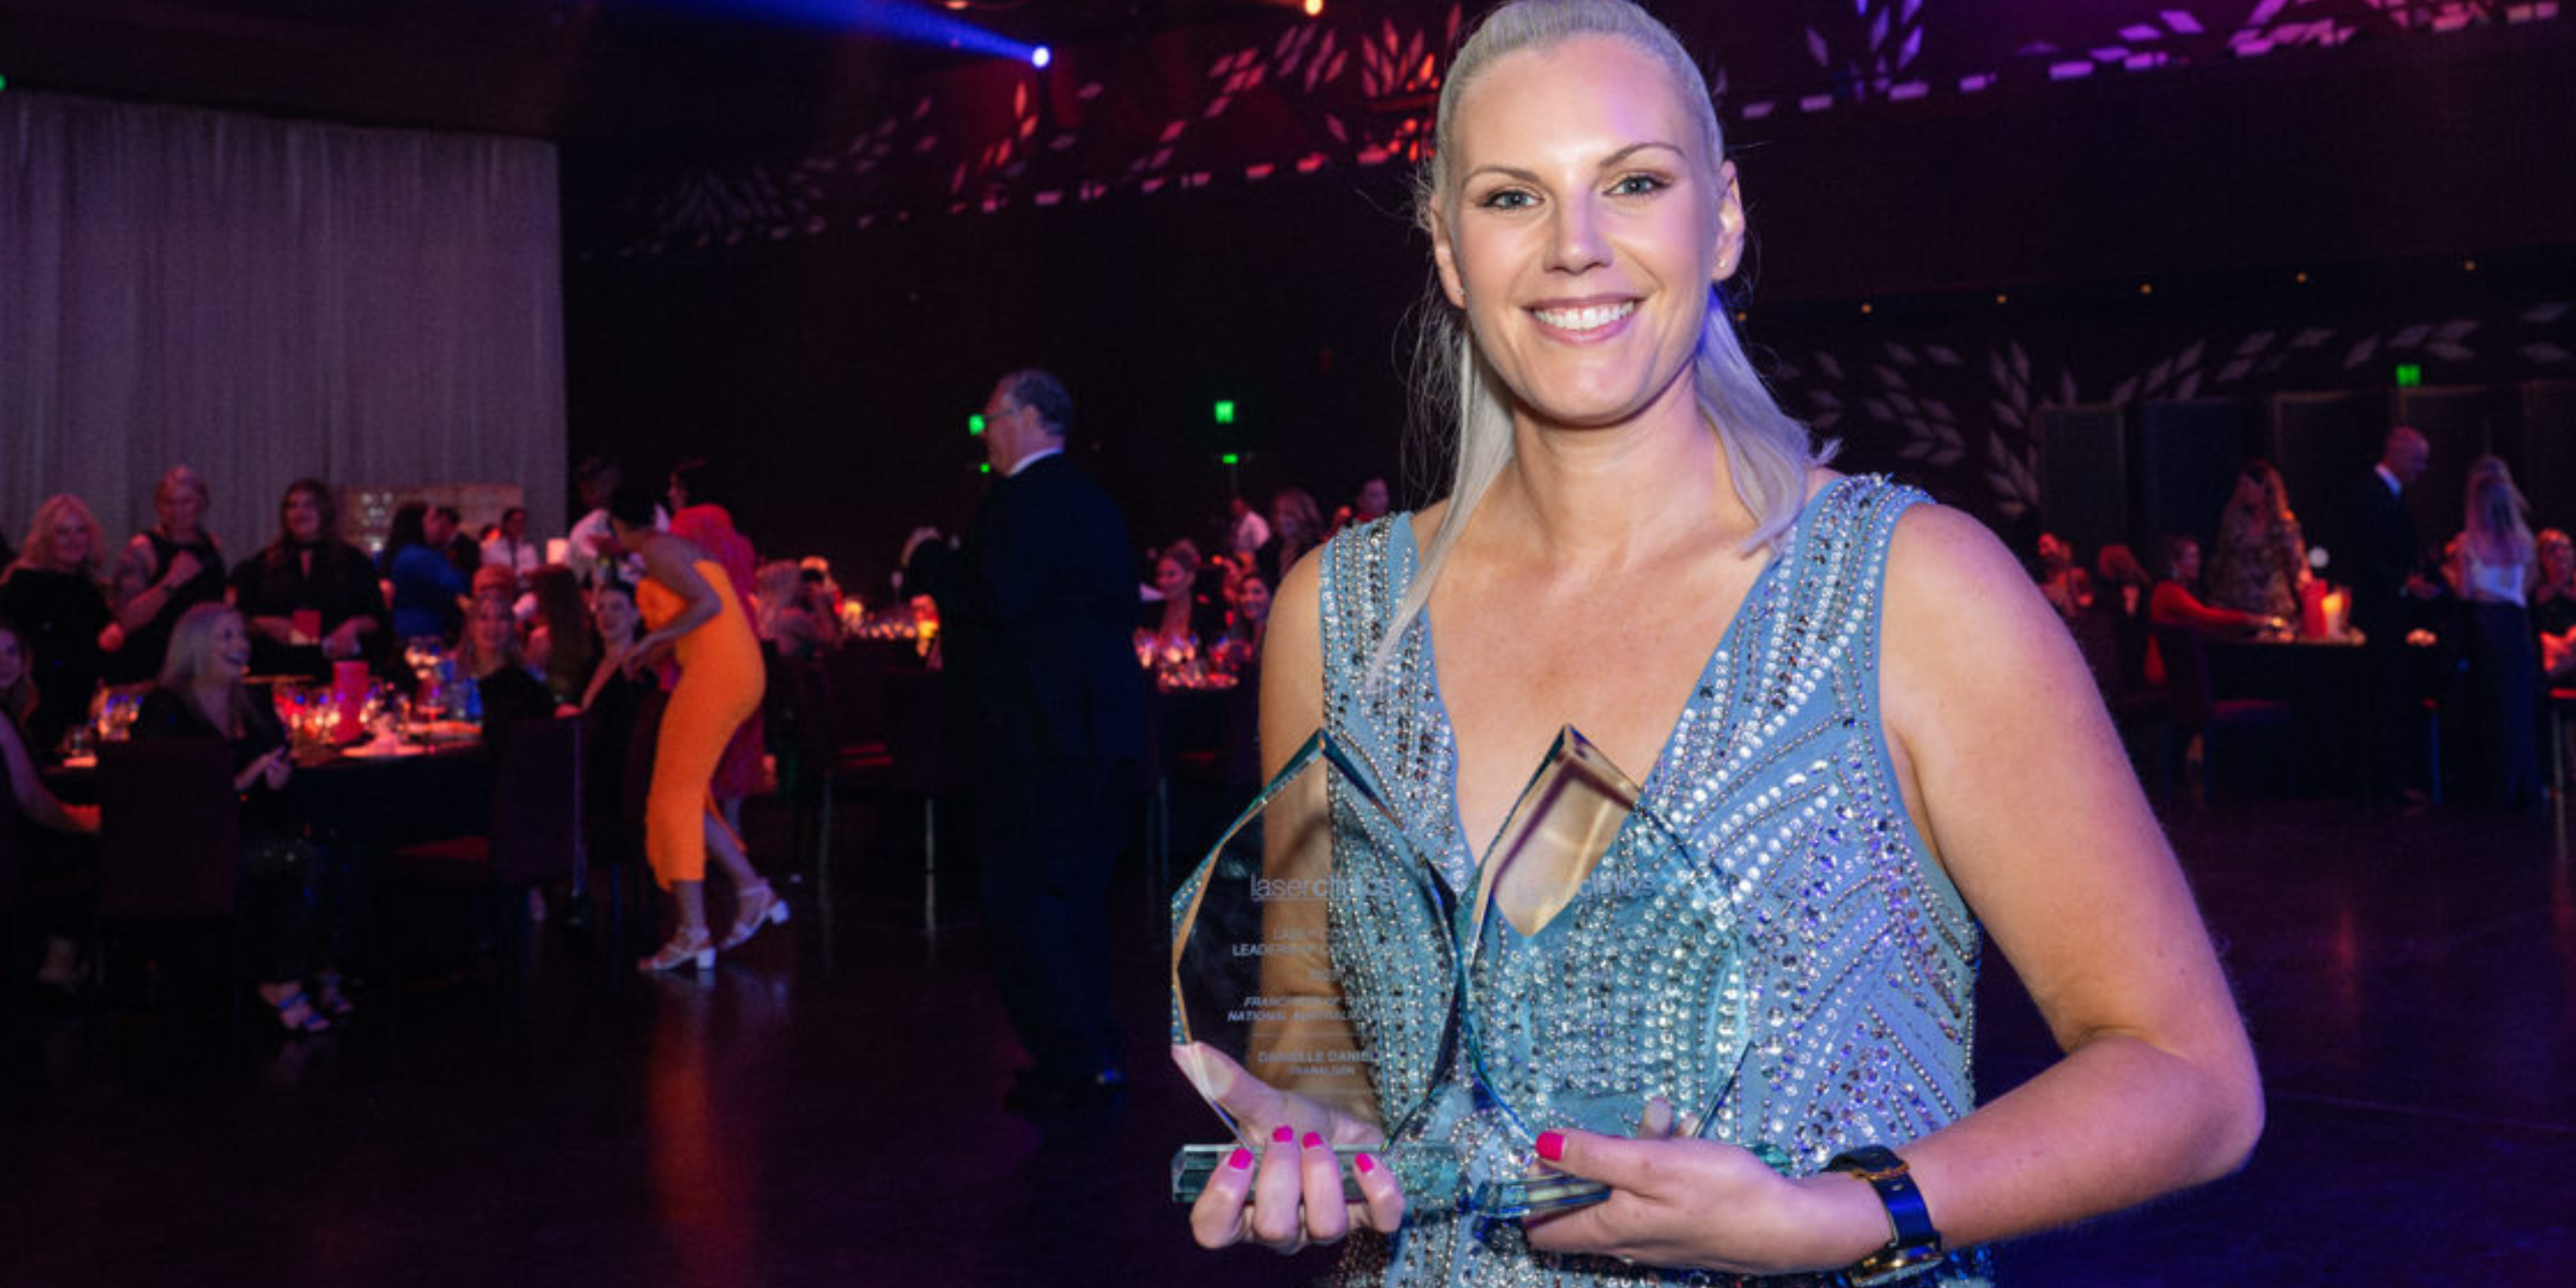 Winning team helps Danielle claim top franchisee award